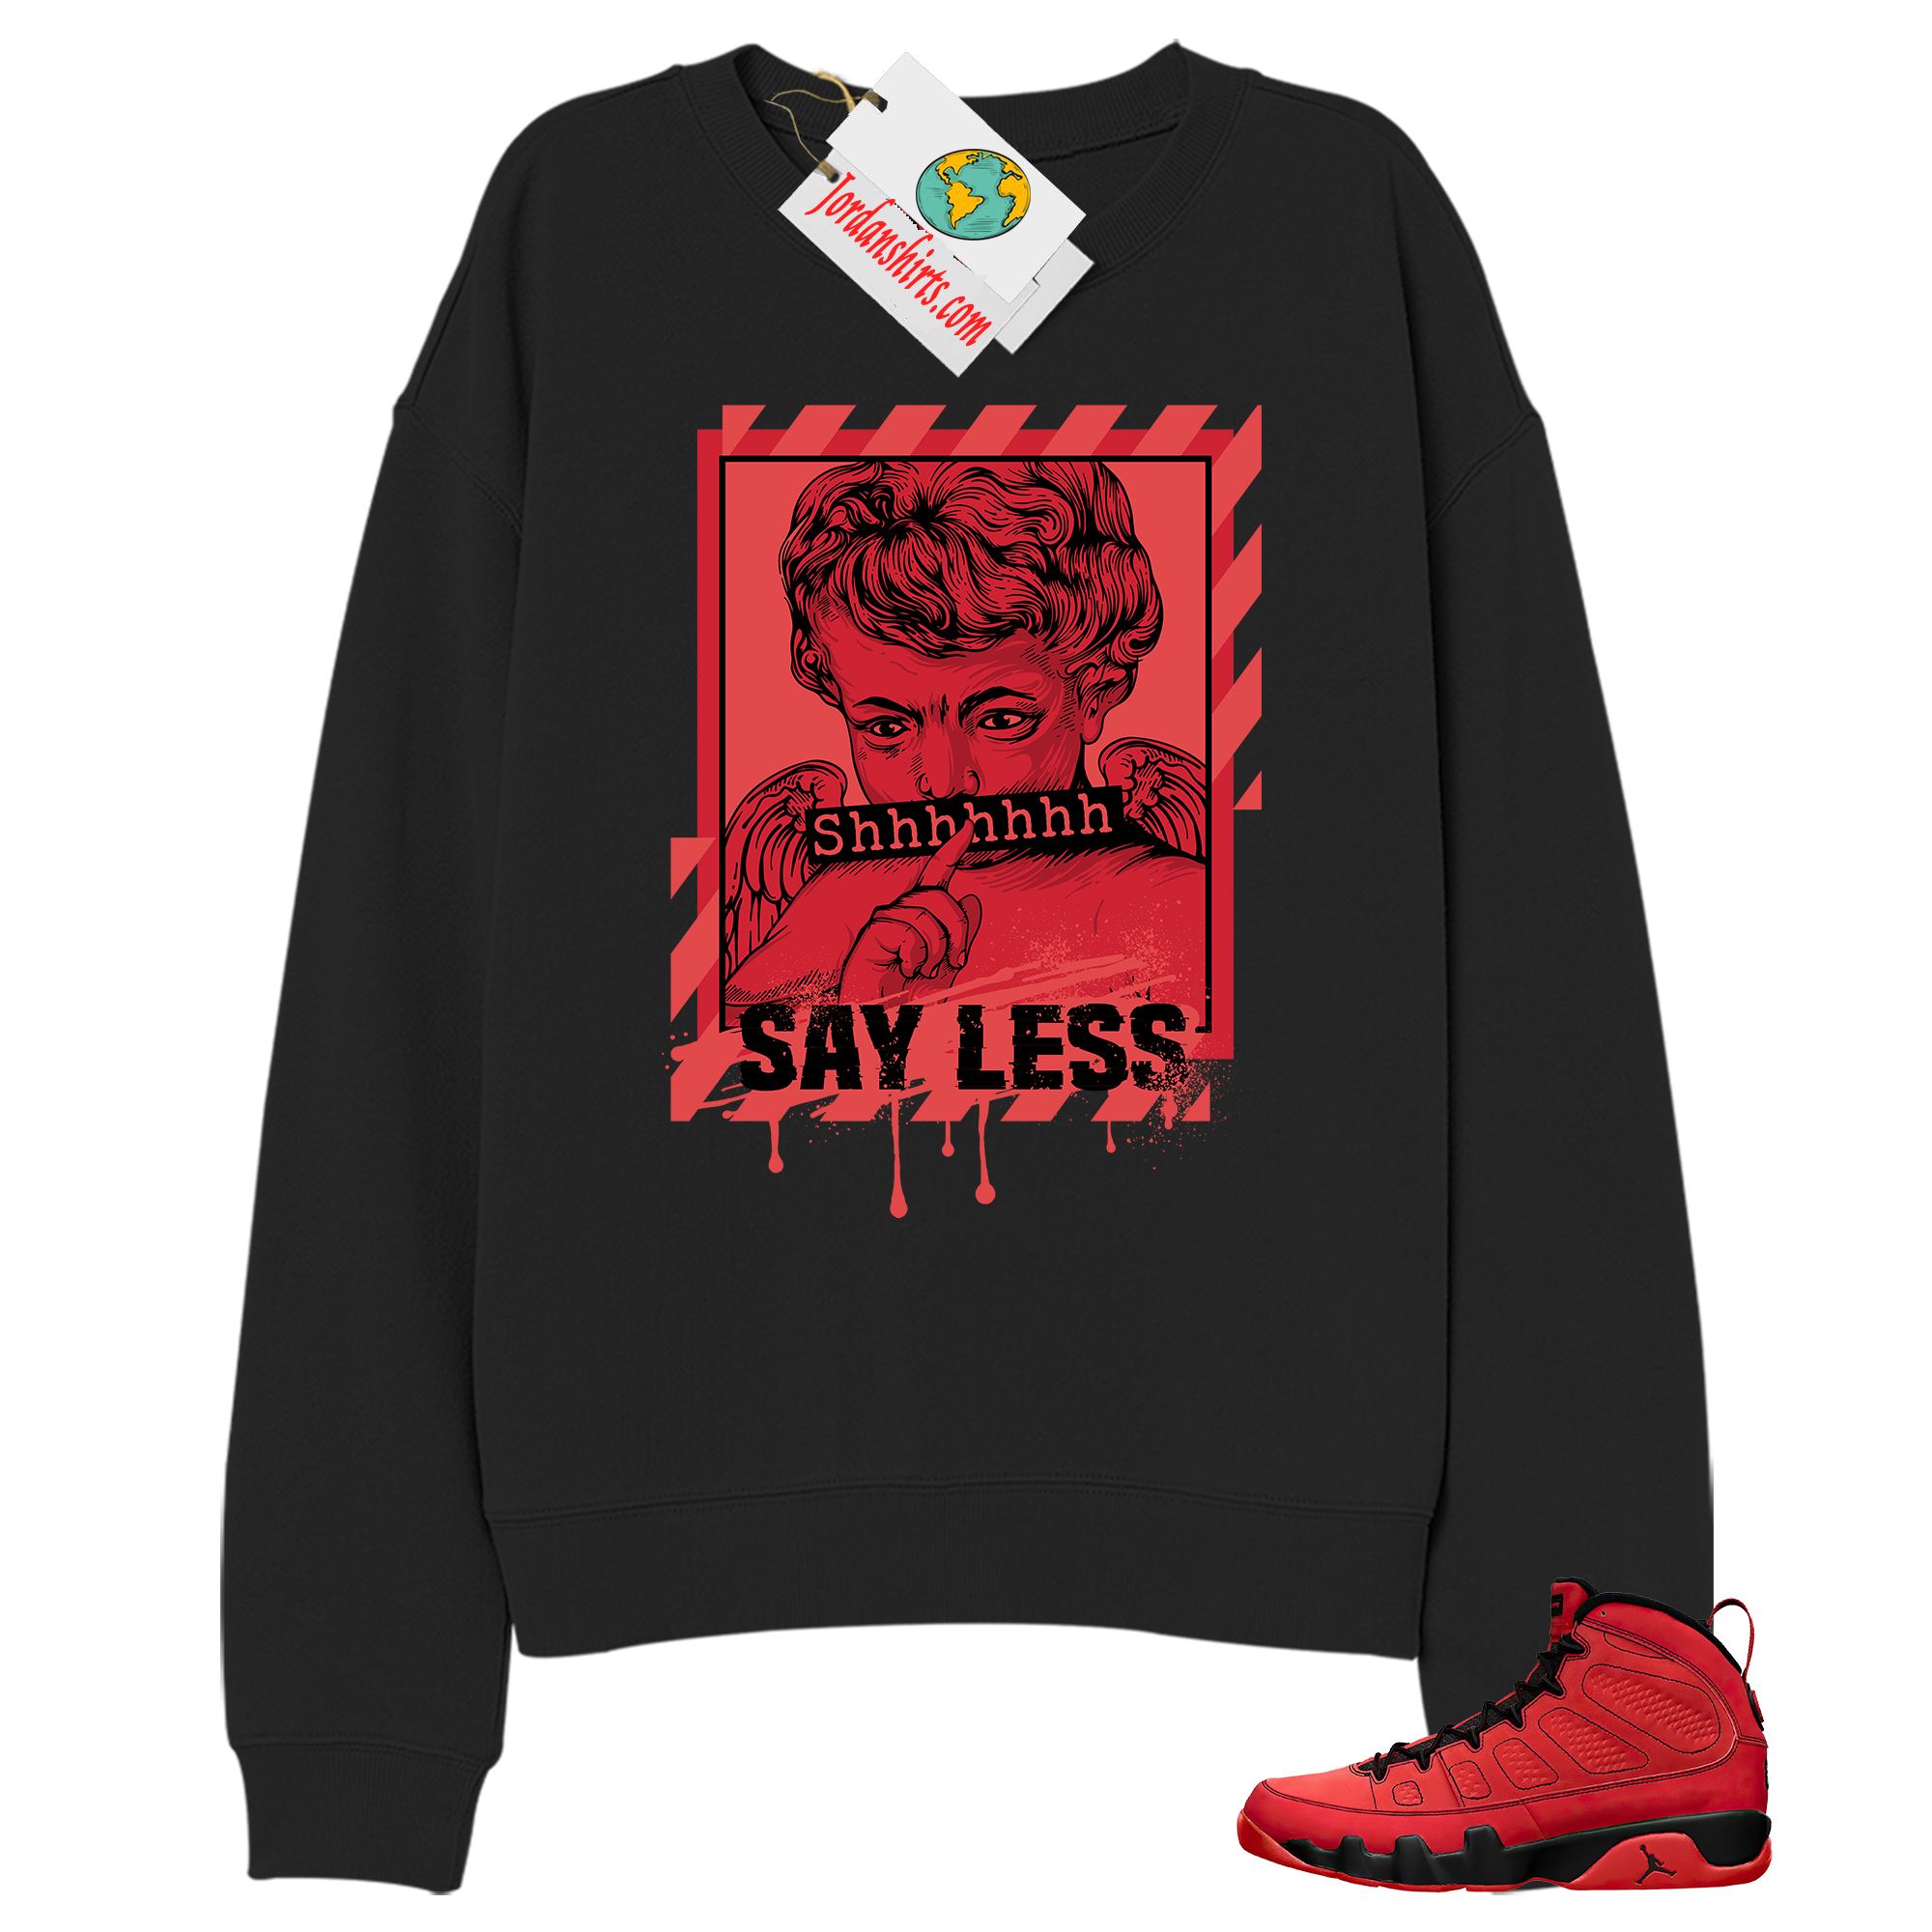 Jordan 9 Sweatshirt, Say Less Angel Black Sweatshirt Air Jordan 9 Chile Red 9s Size Up To 5xl